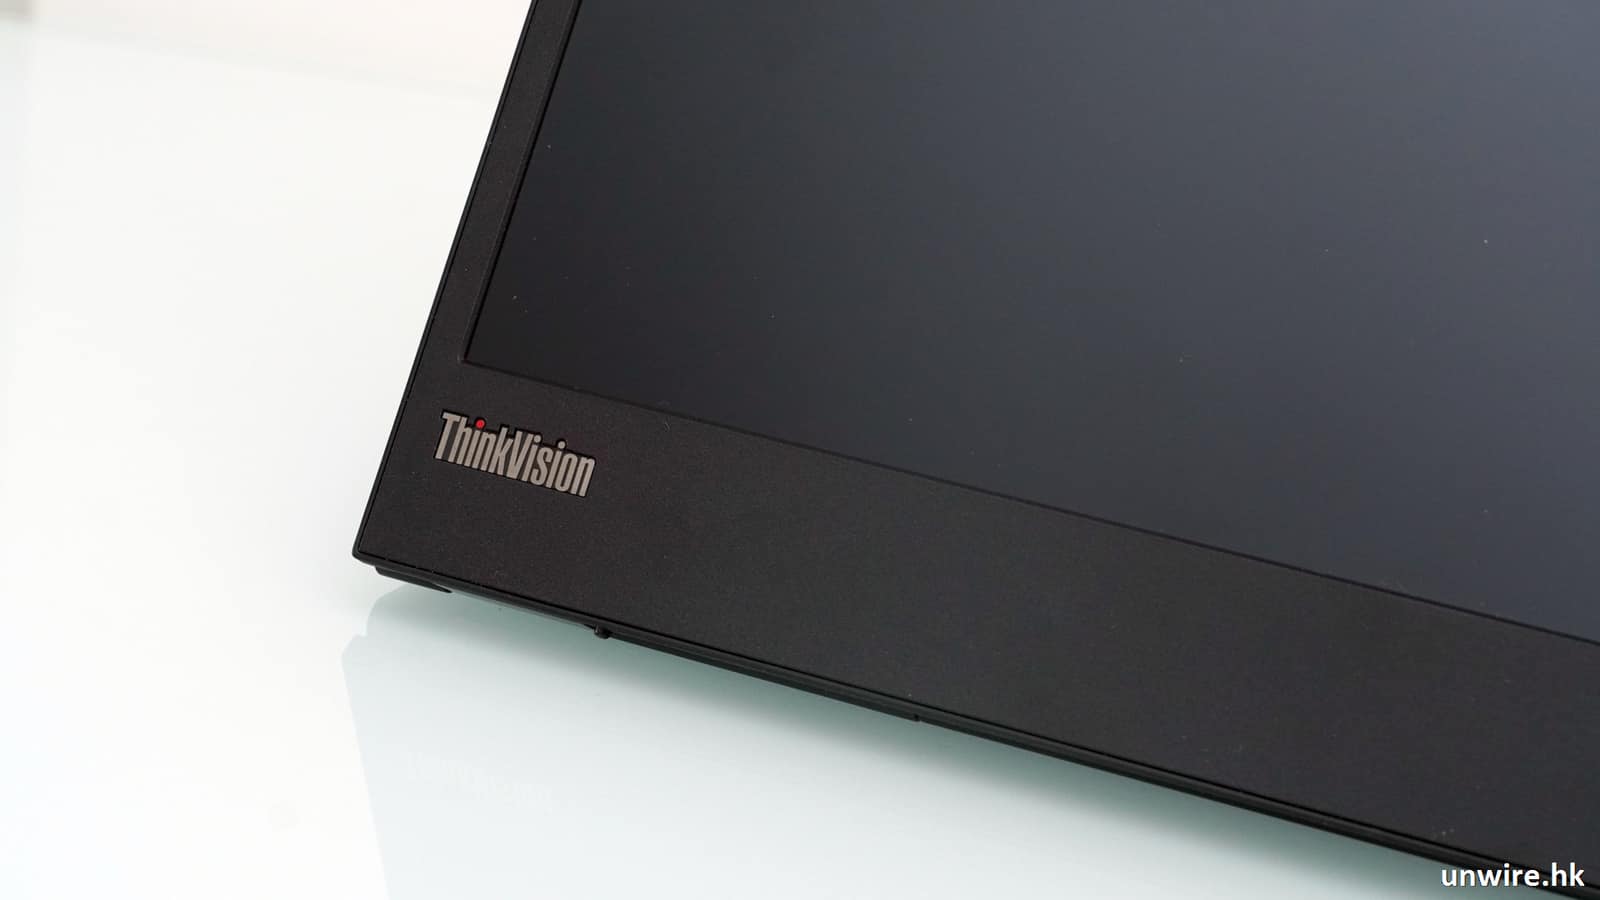 評測】Lenovo ThinkVision M15 開箱測試外形手感熒幕質素功能- unwire